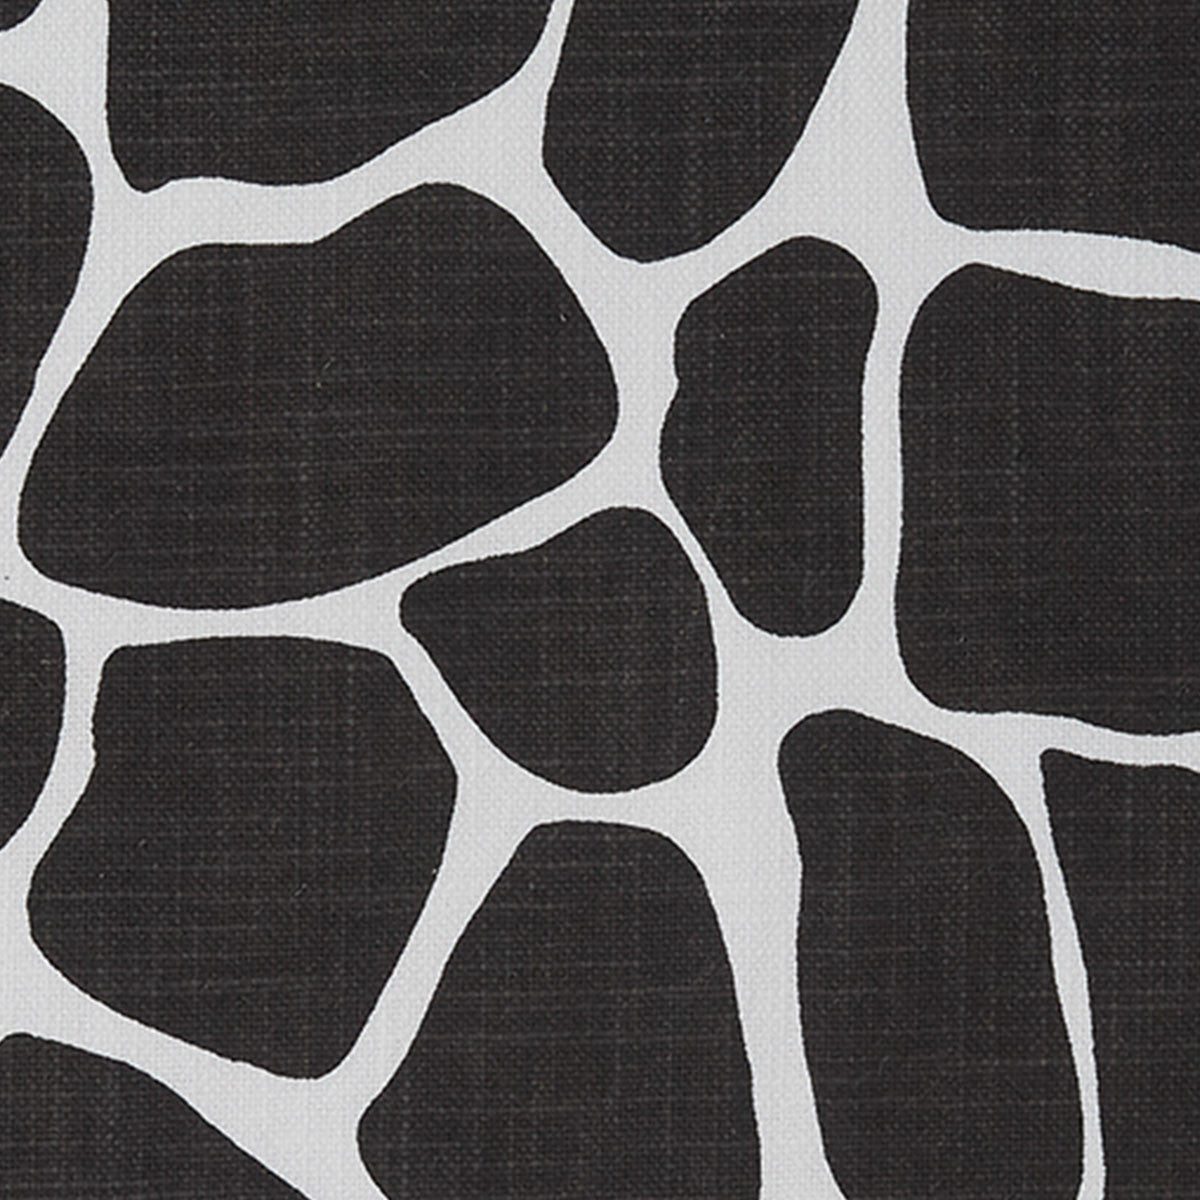 Giraffe Printed Placemat - Black Set of 4  Park Designs